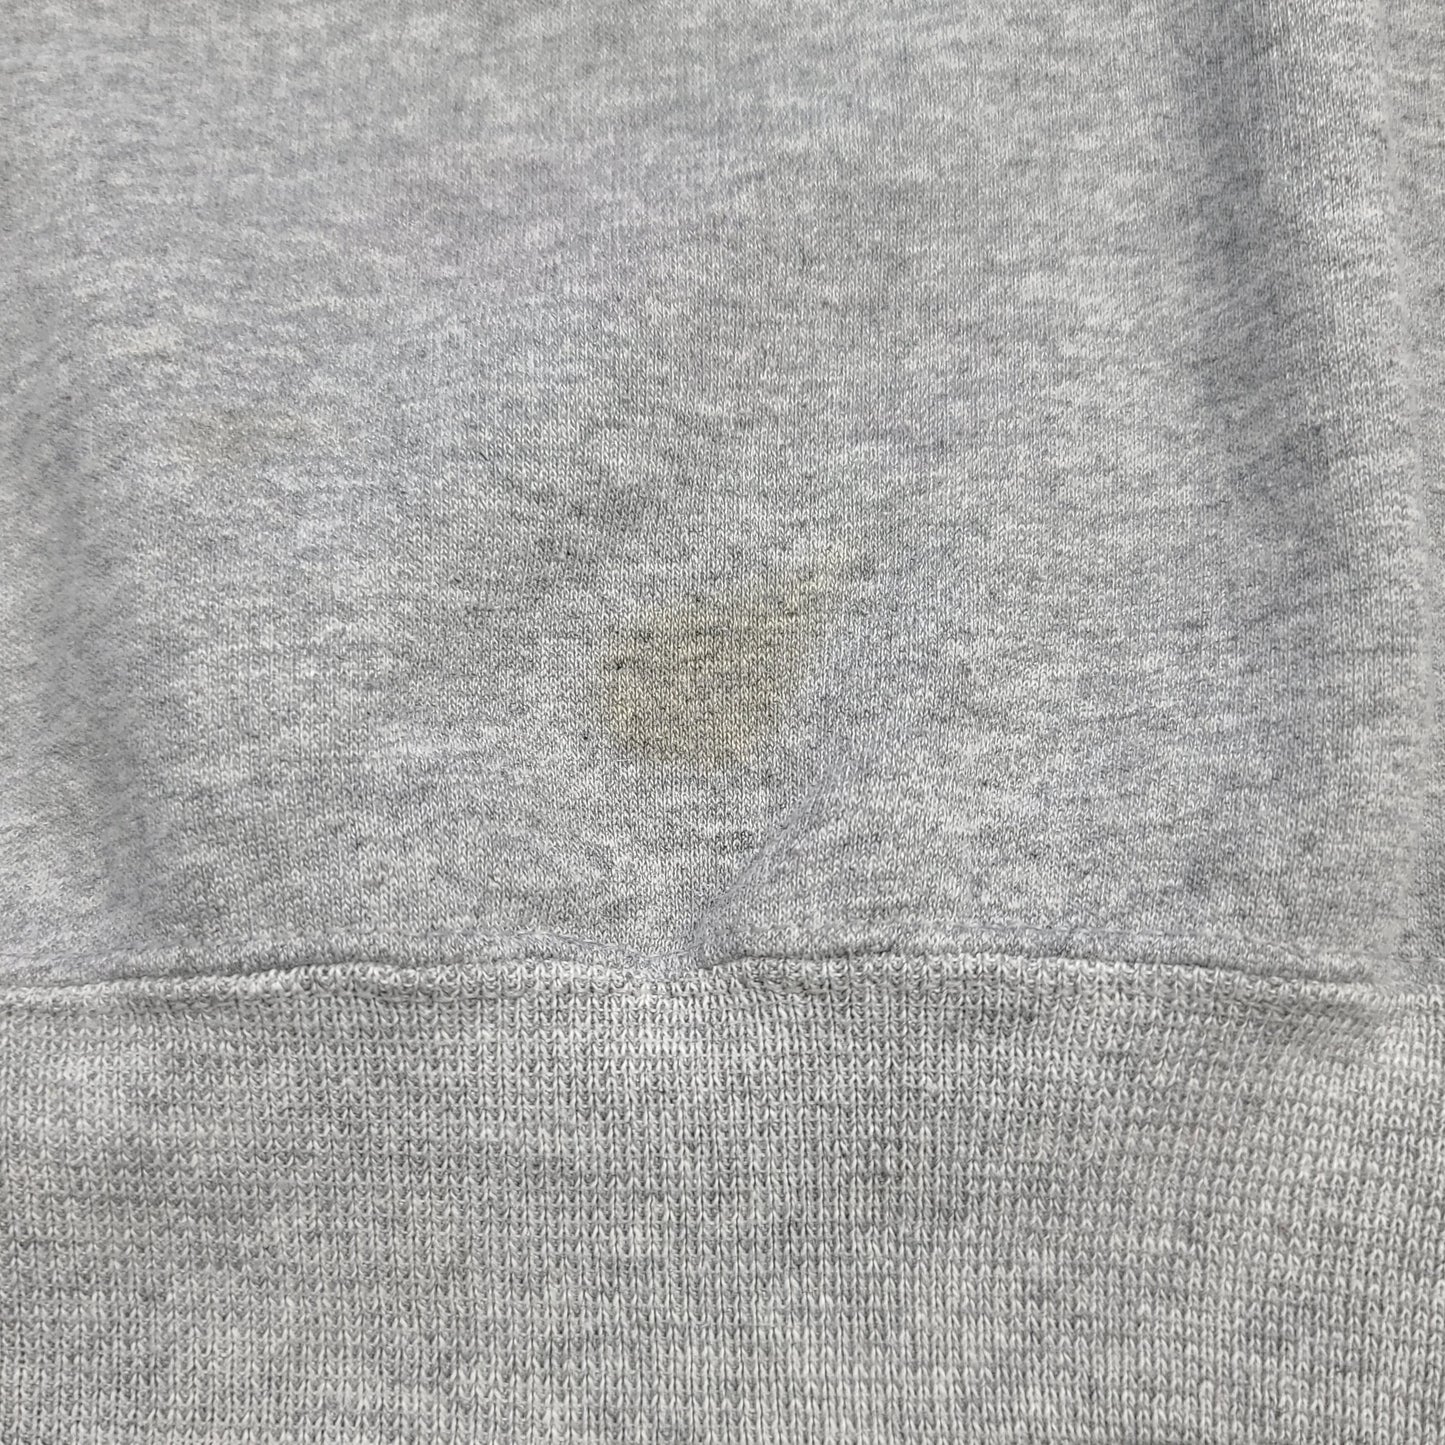 Vintage Harvard University Gray Champion Sweatshirt